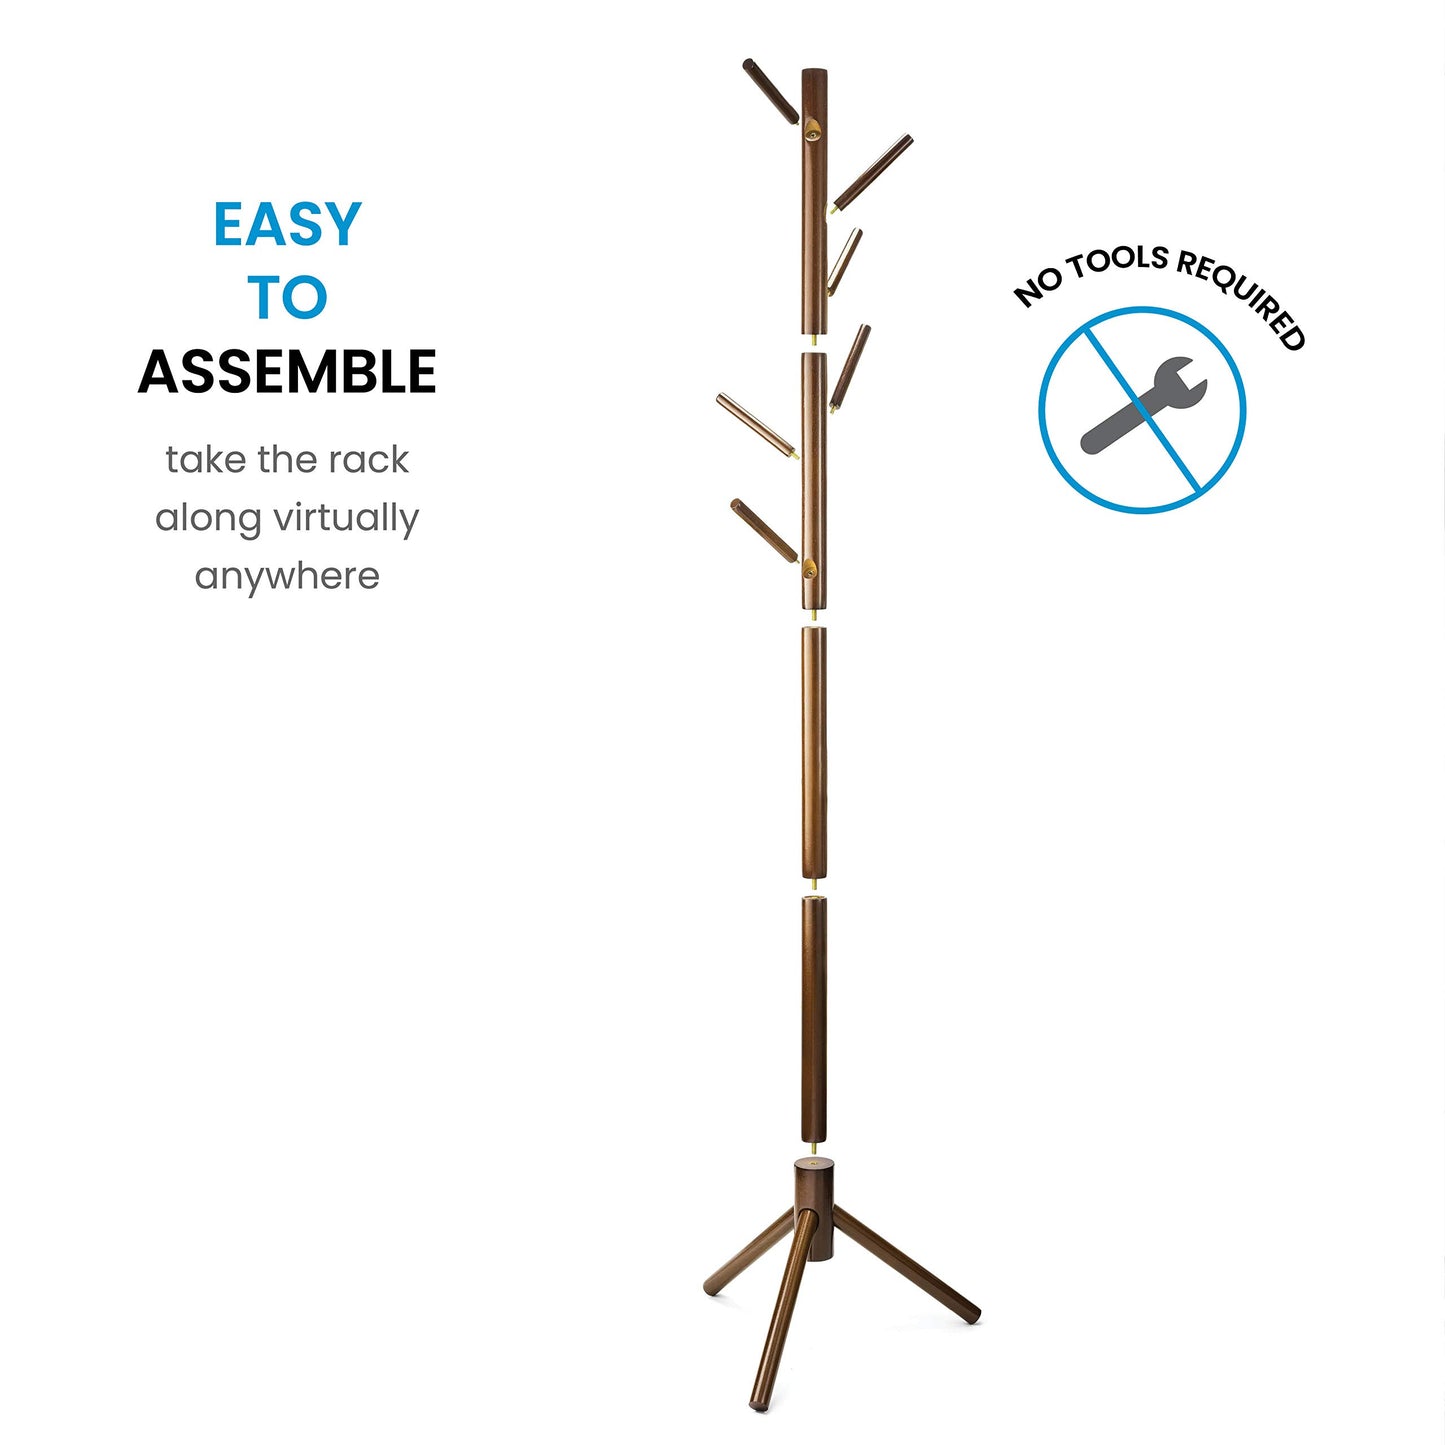 ZOBER Coat Rack Free Standing - Wooden Coat Tree W/ 6 Hooks - Coats, Purses, Hats - Adjustable Sizes, Easy Assembly - Vintage